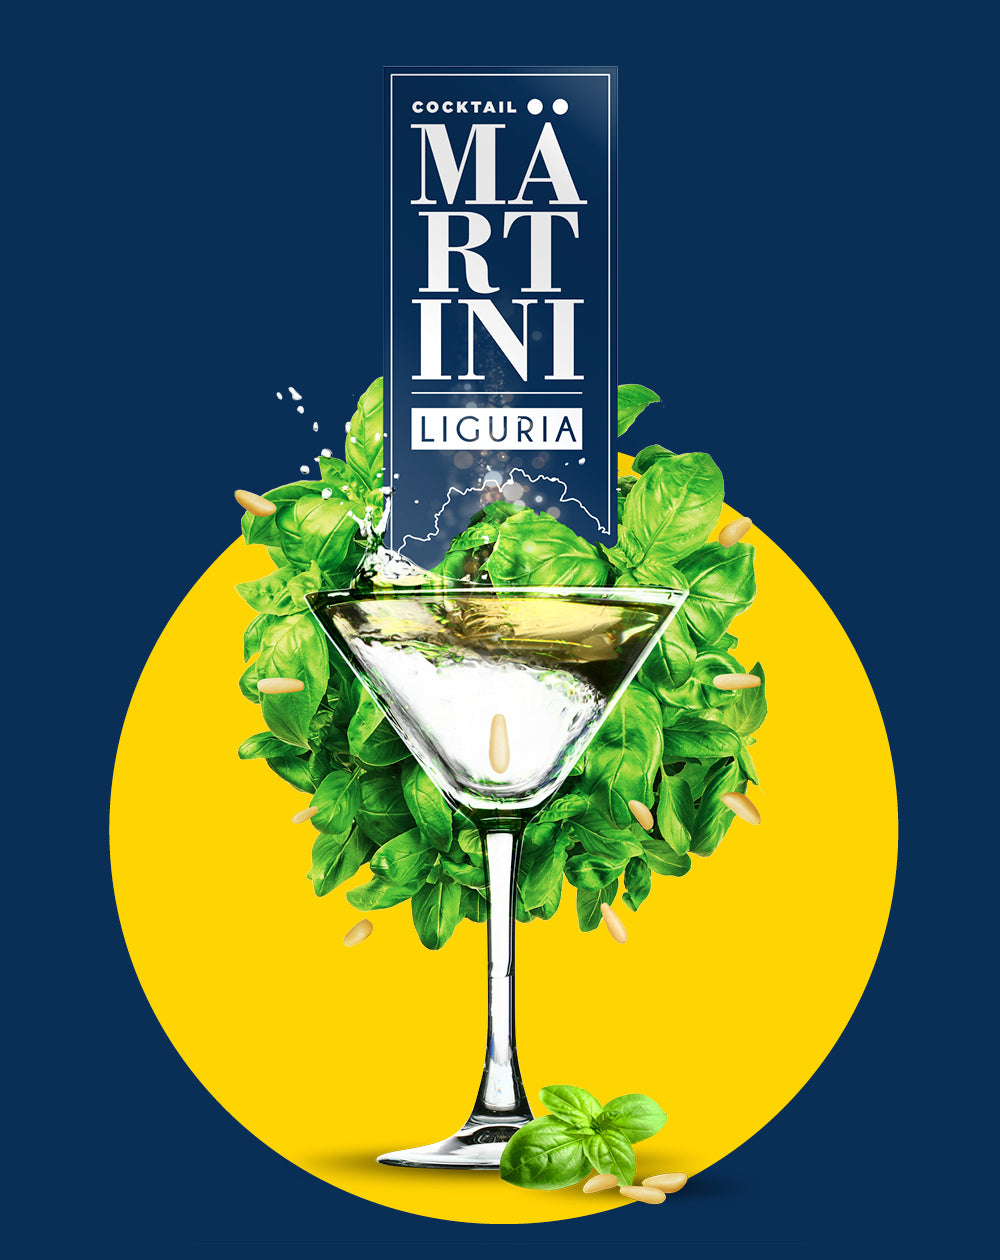 KIT per COCKTAIL MÄRTINI LIGURIA – Gin Mä - Store ufficiale